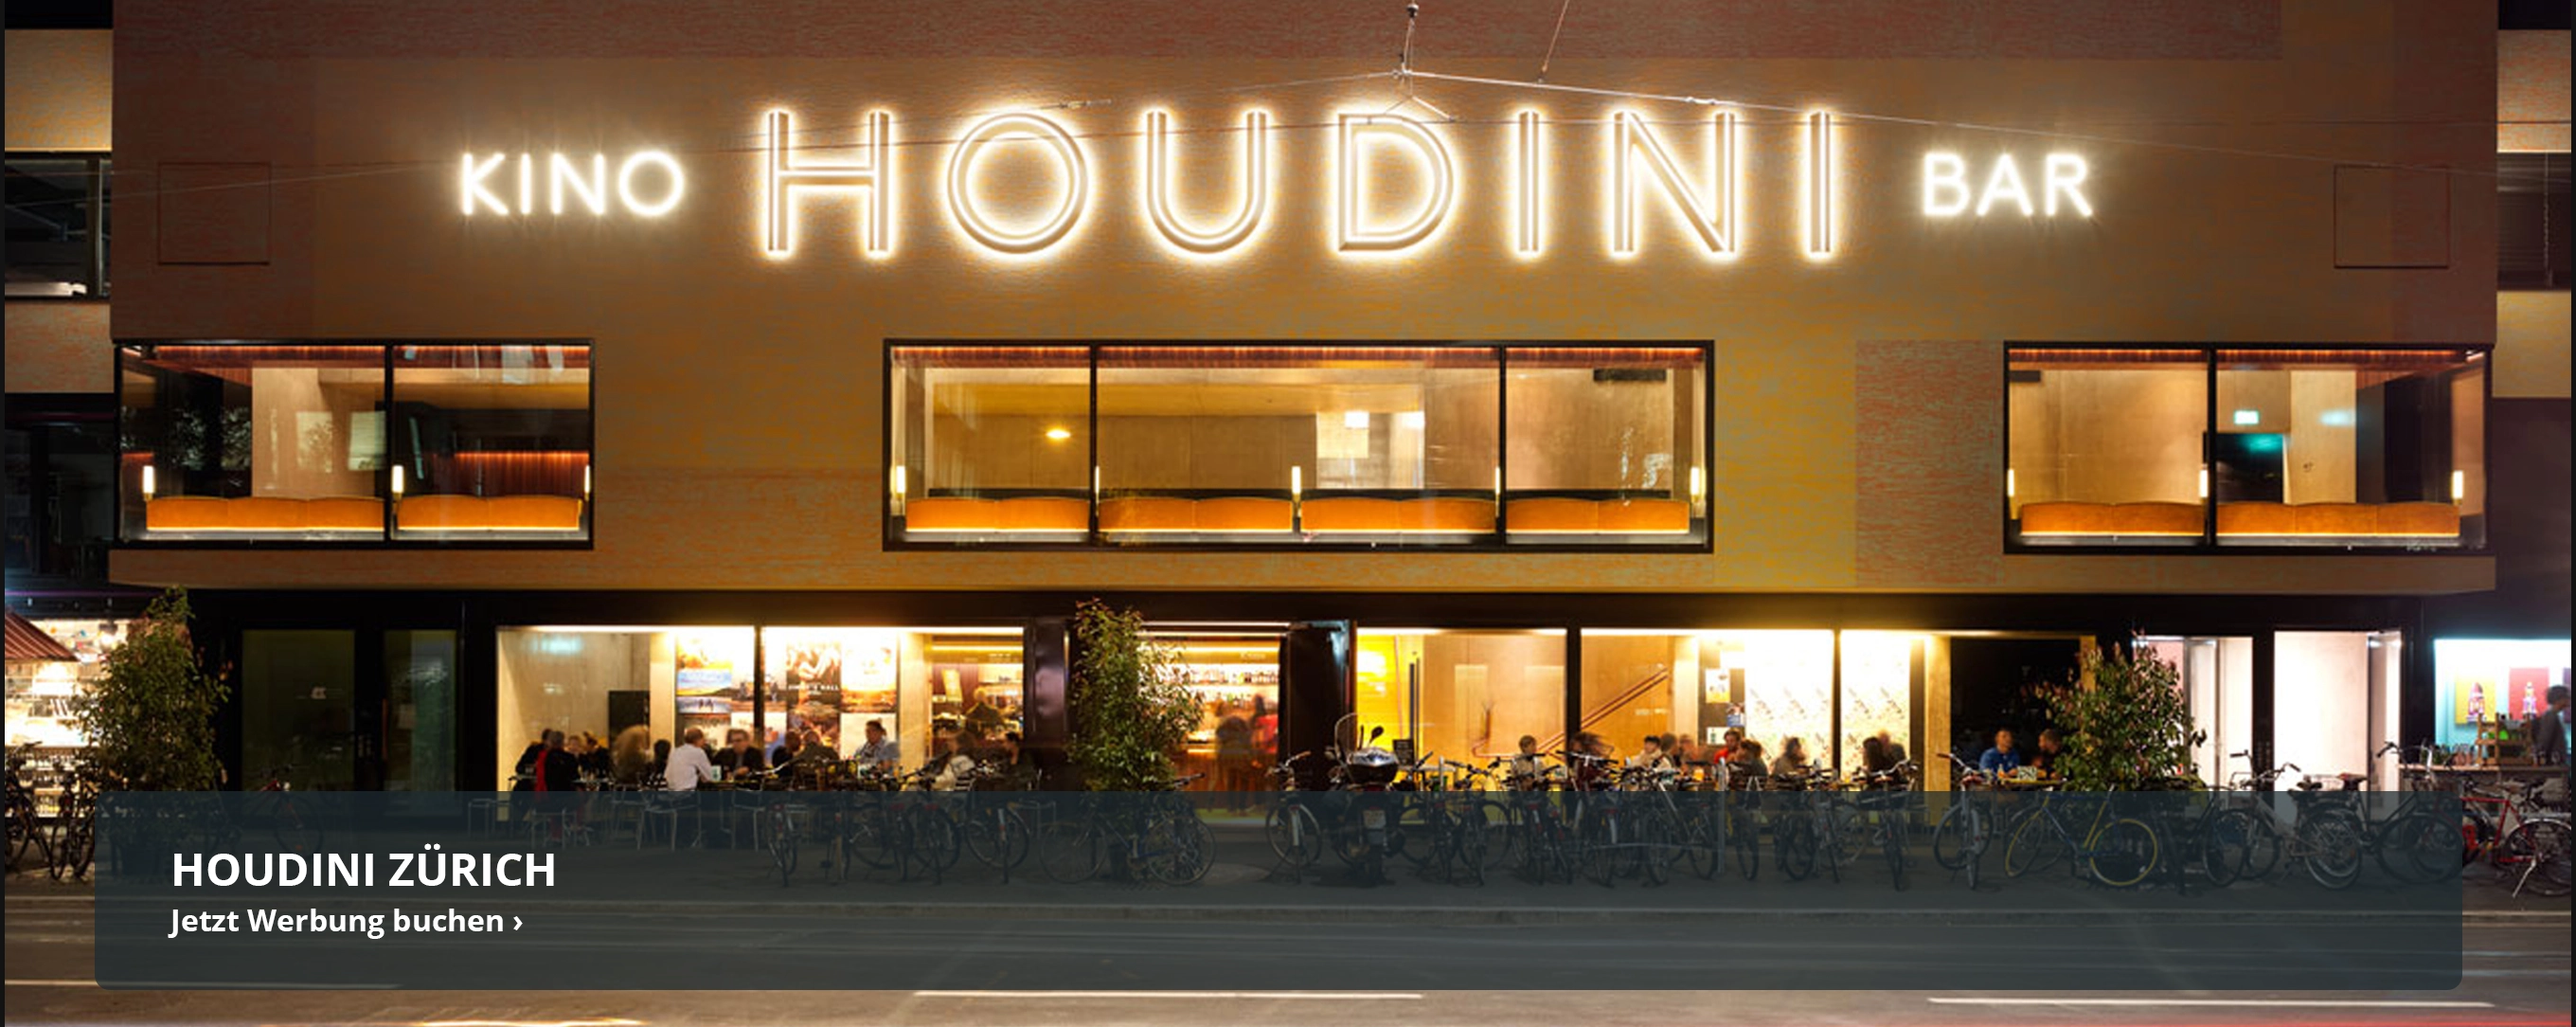 D-Houdini_Zuerich